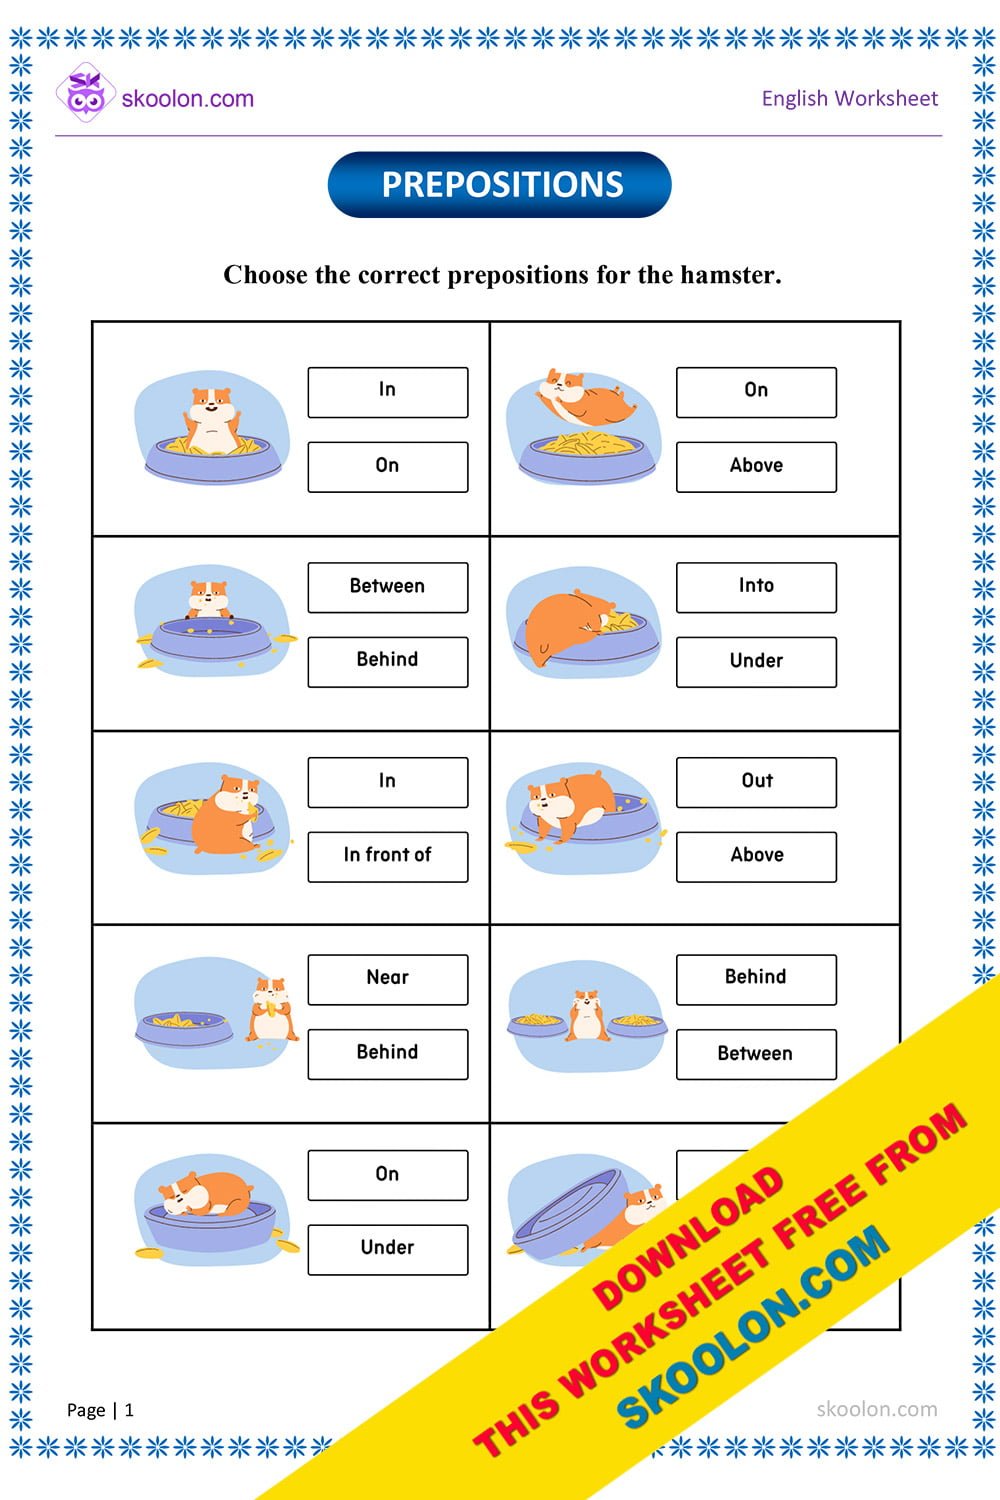 prepositions-worksheet-4-skoolon